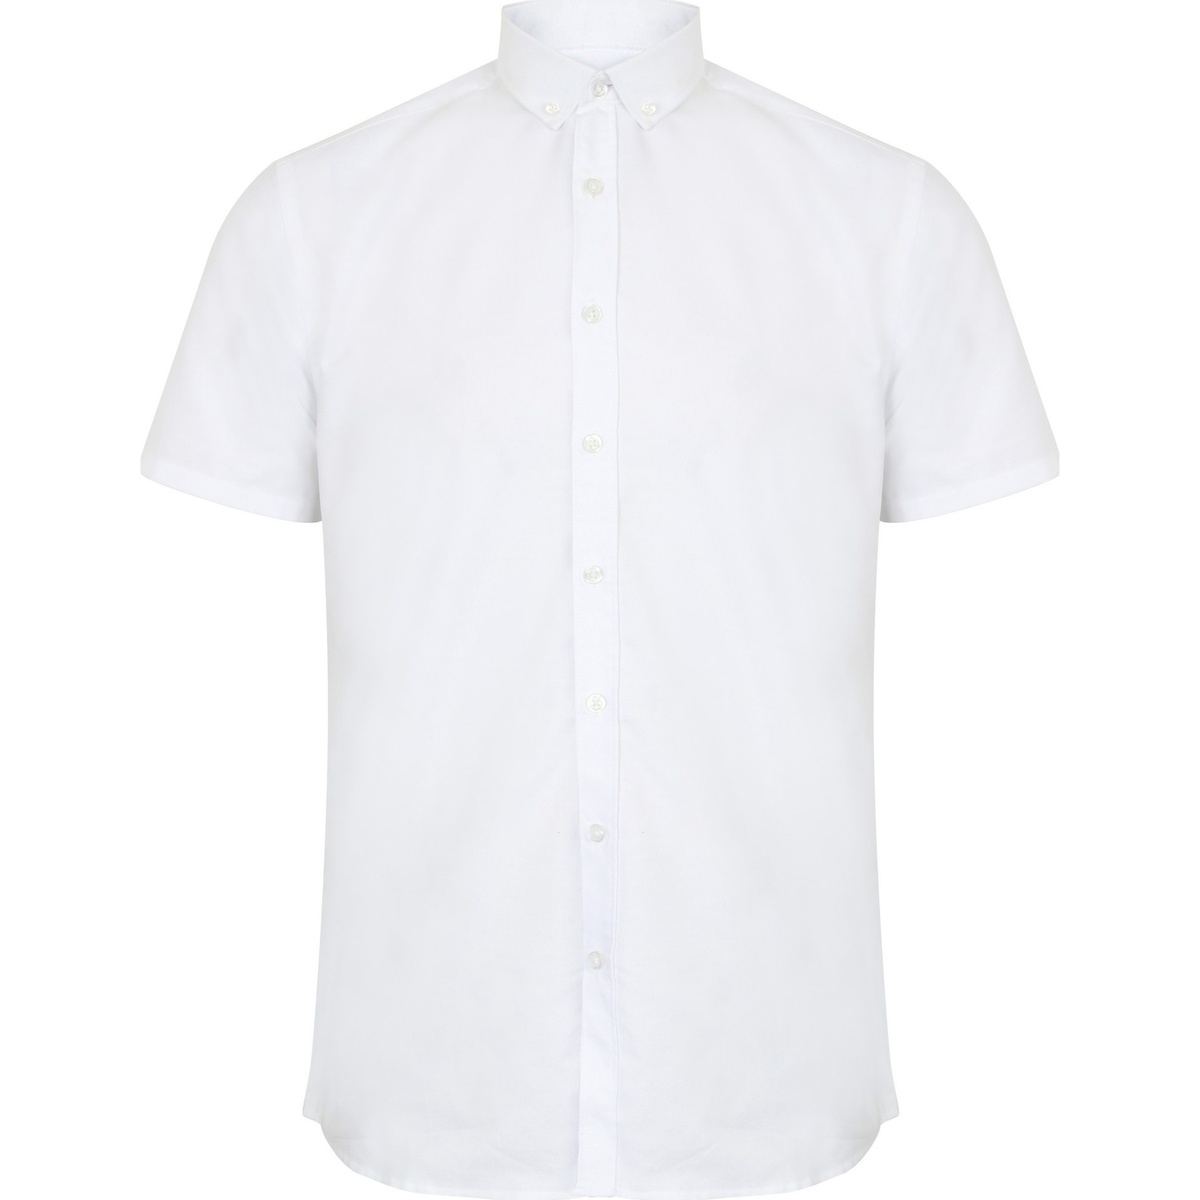 textil Hombre Camisas manga corta Henbury HB517 Blanco